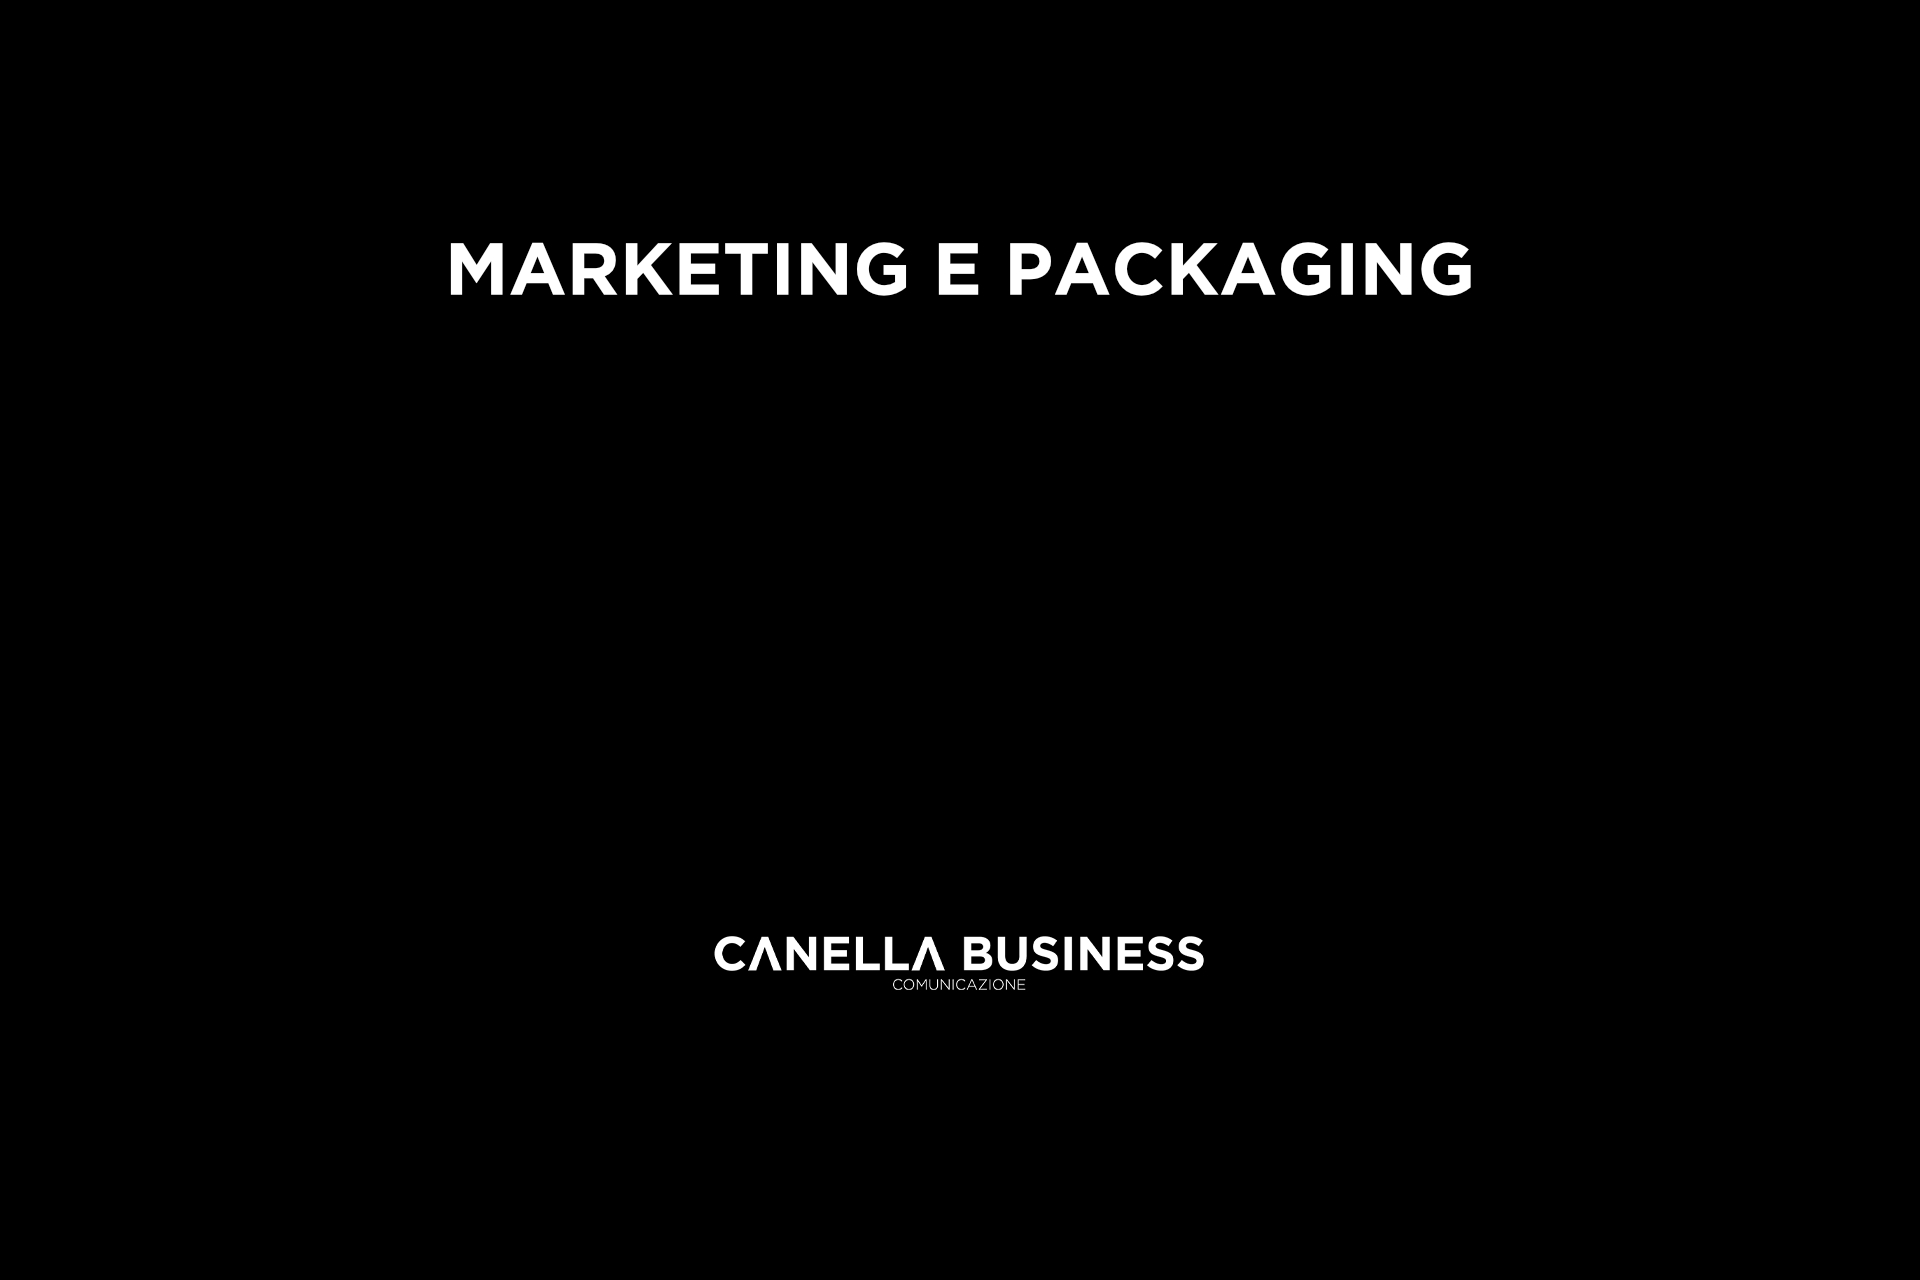 Marketing e packaging